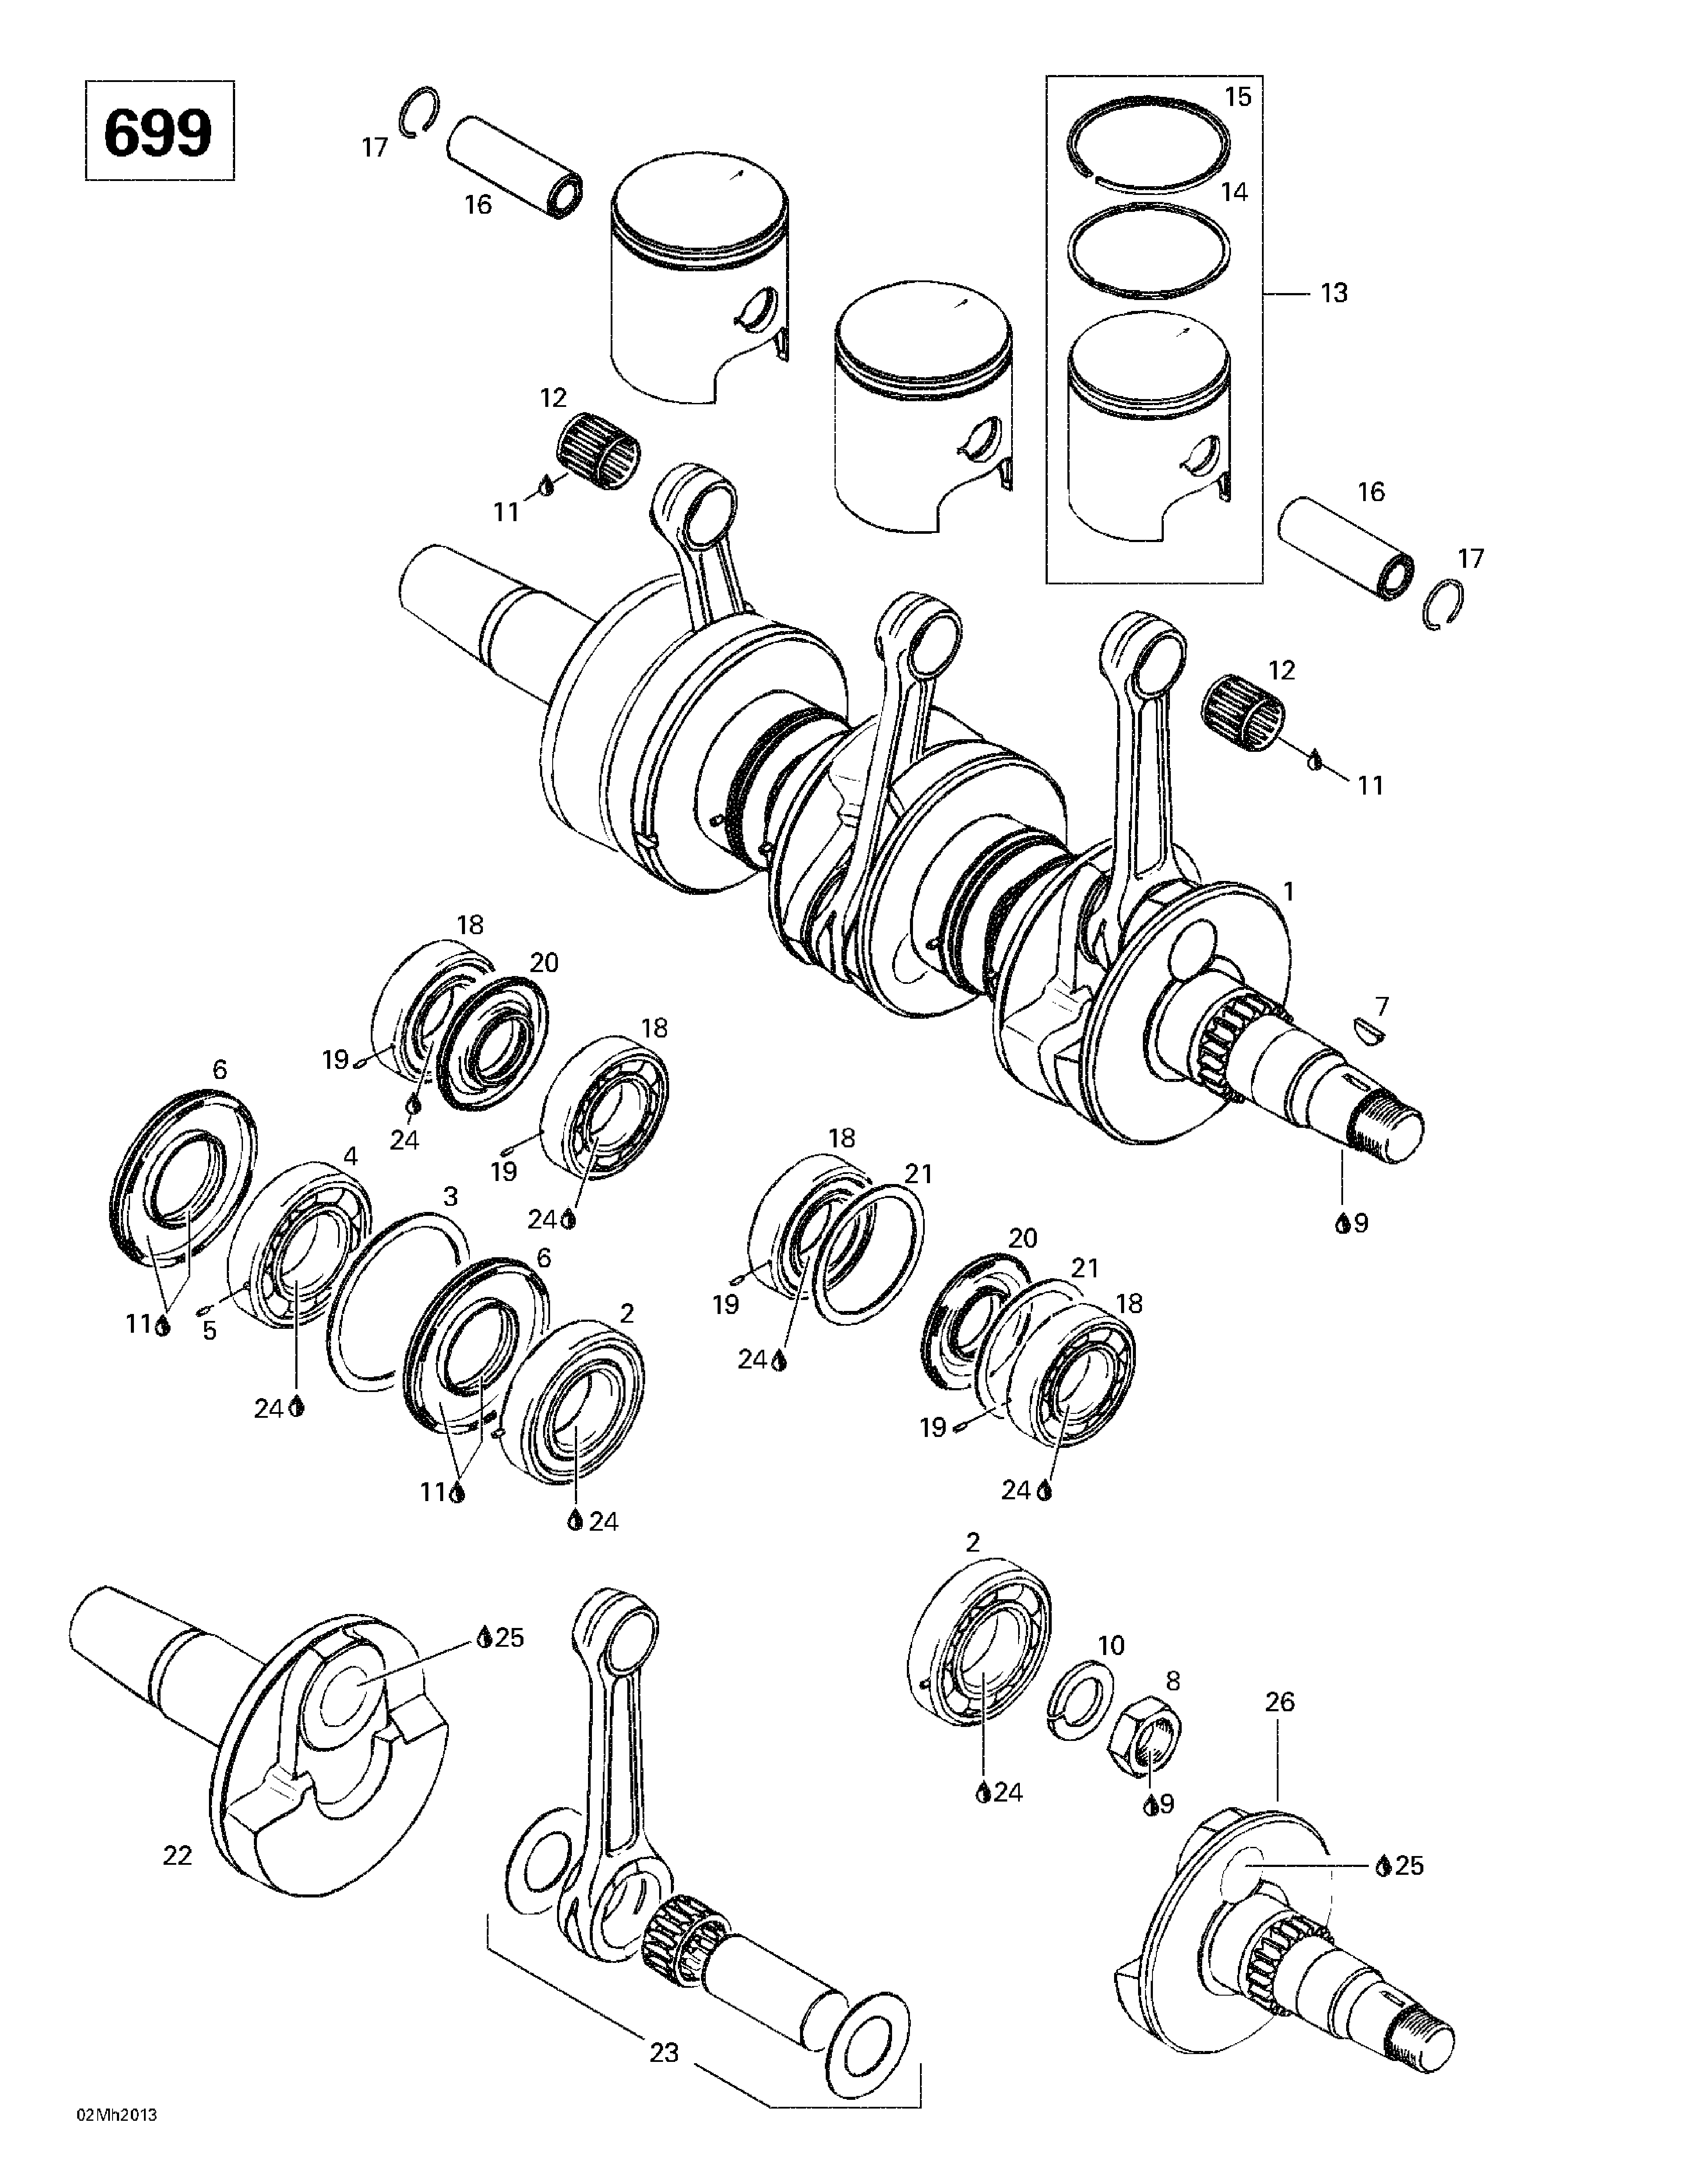 Crankshaft and pistons